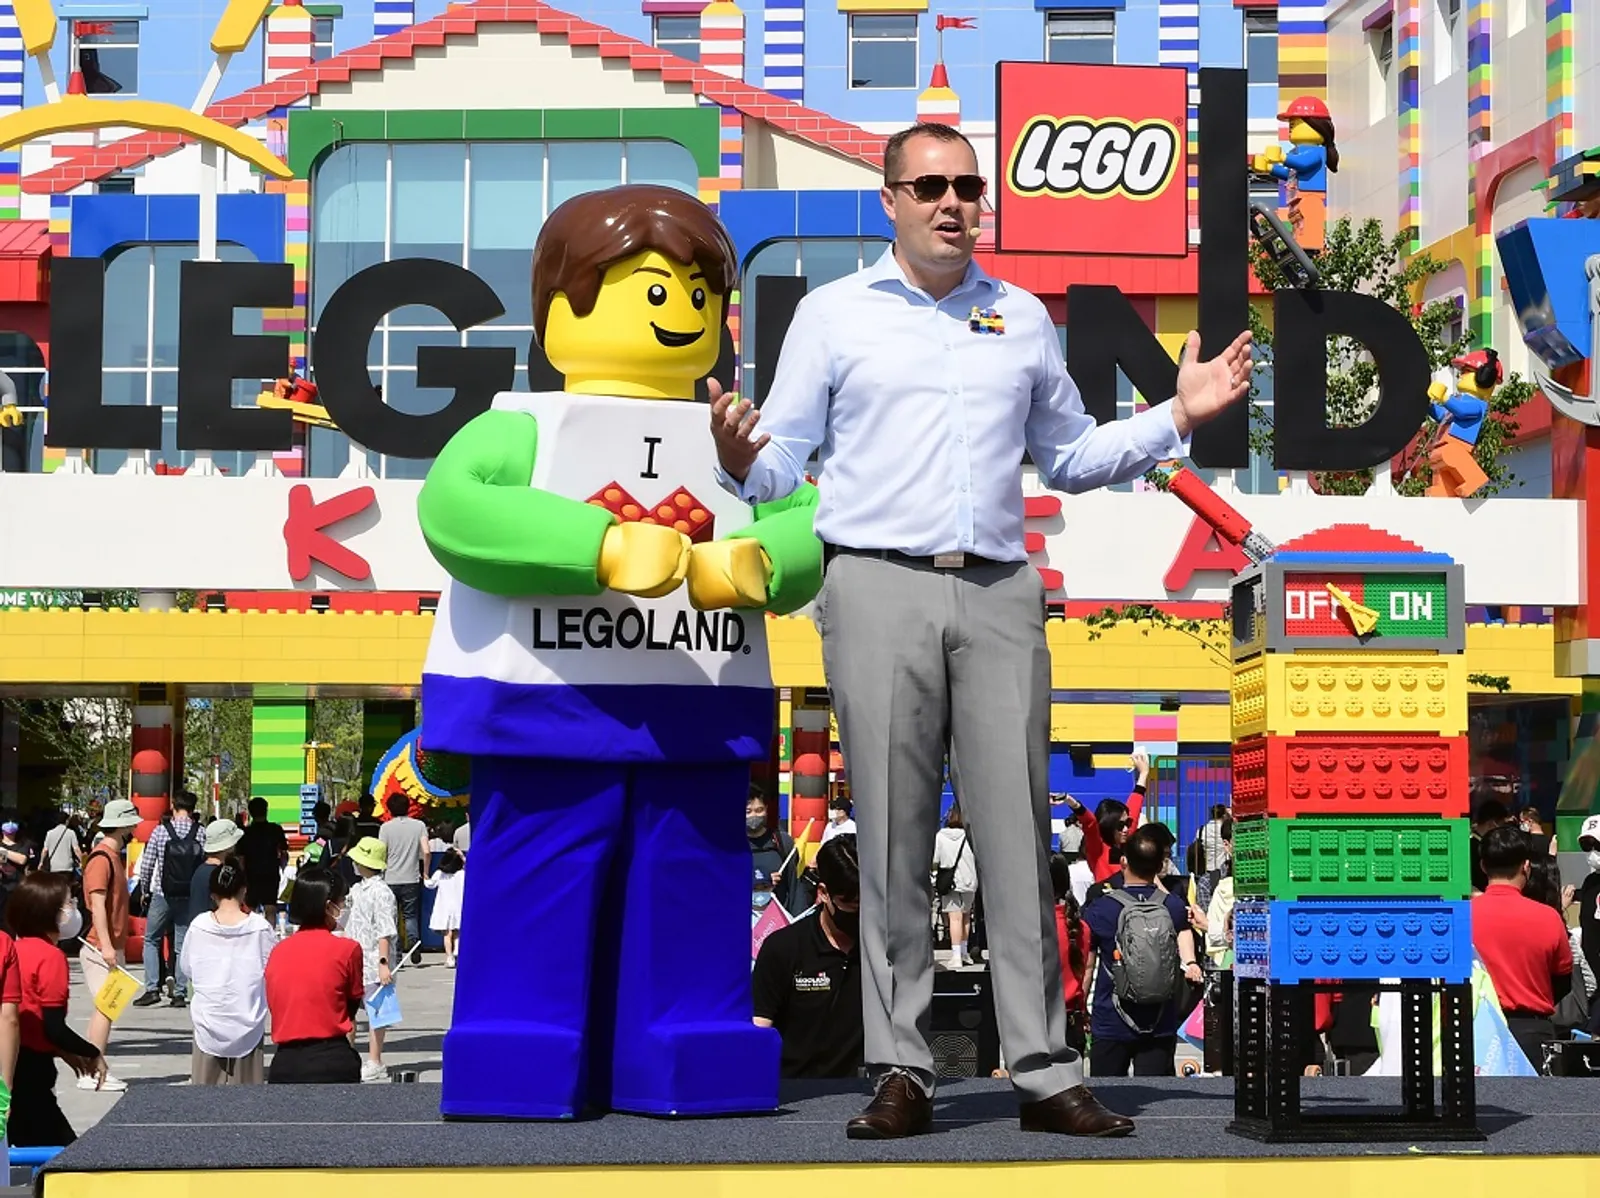 Resmi Dibuka, Legoland Korea Sudah Ramai Pengunjung Sejak Hari Pertama